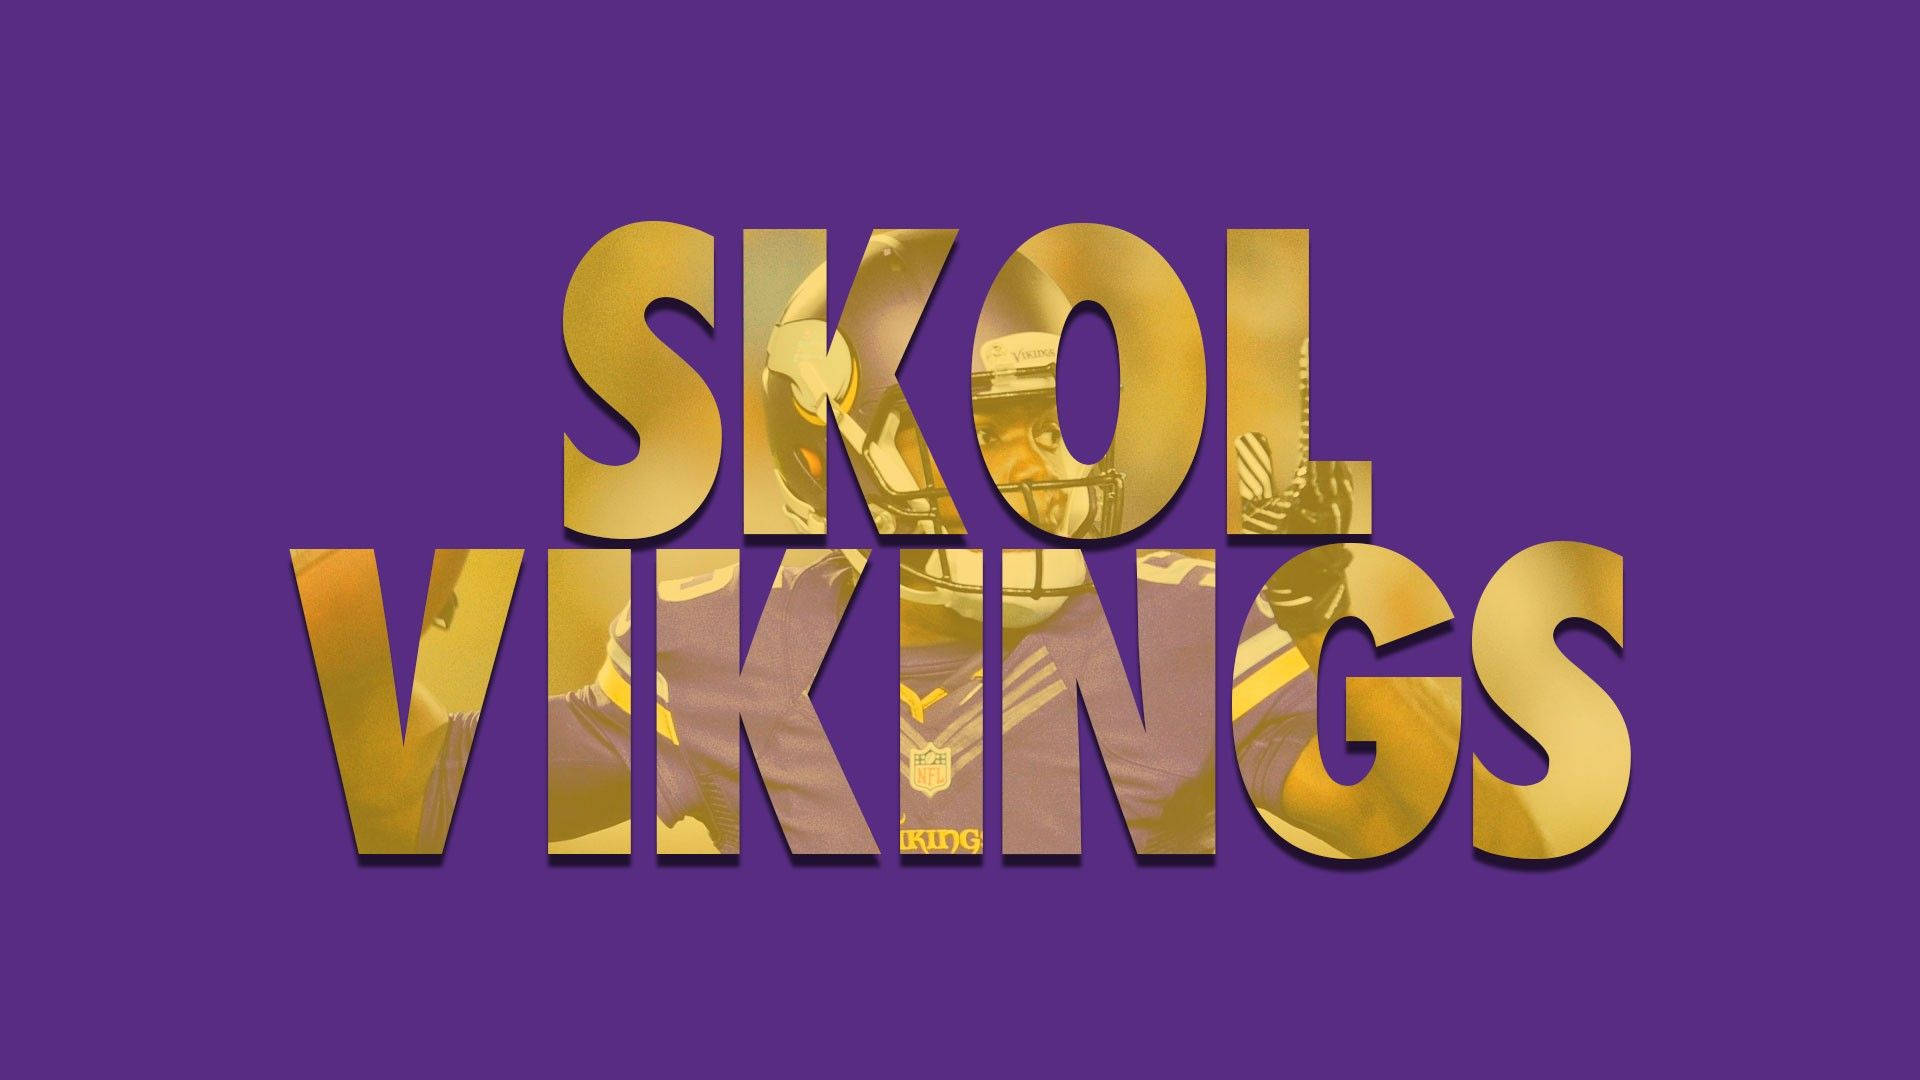 Vikings 2019 Wallpapers